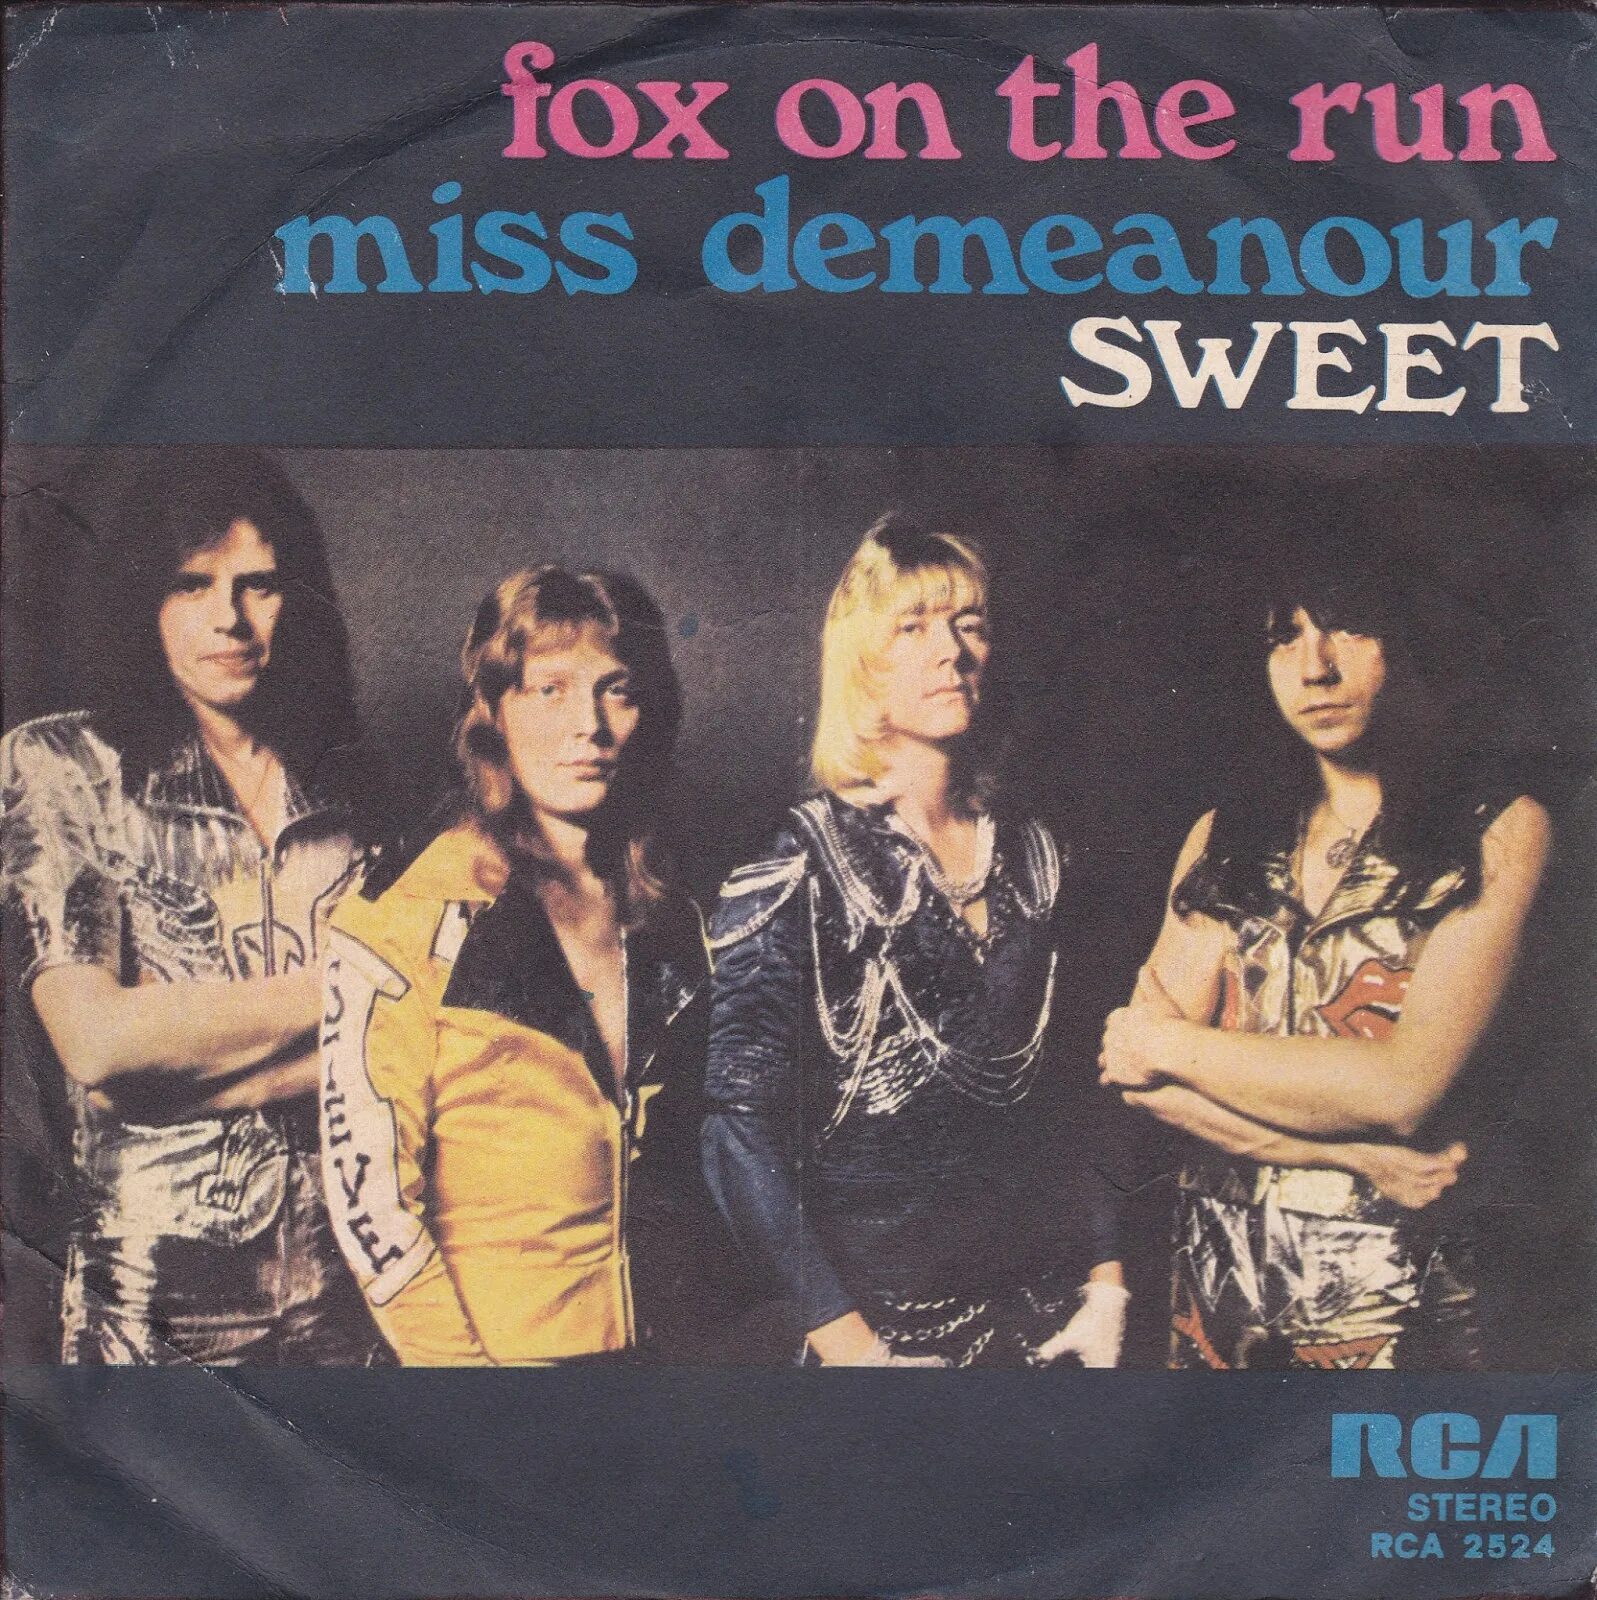 Fox on the Run-1975 Sweet. Fox on the Run группы the Sweet.. Sweet. Группа Sweet альбомы. Послушать sweet